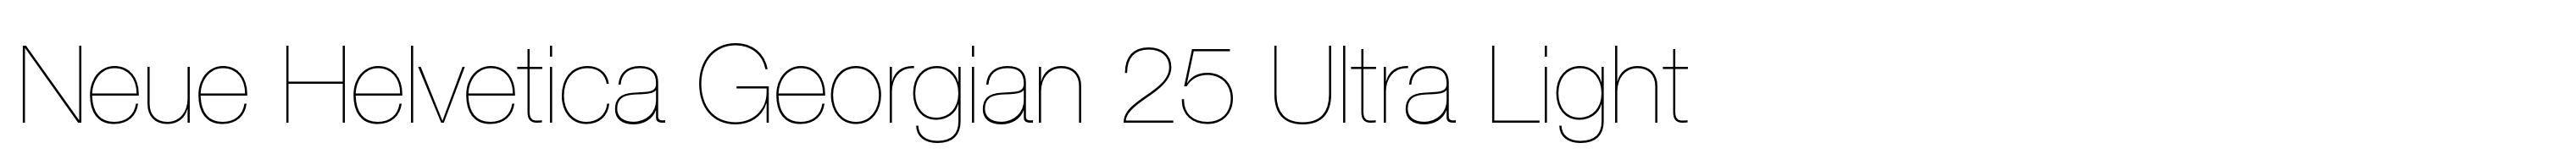 Neue Helvetica Georgian 25 Ultra Light